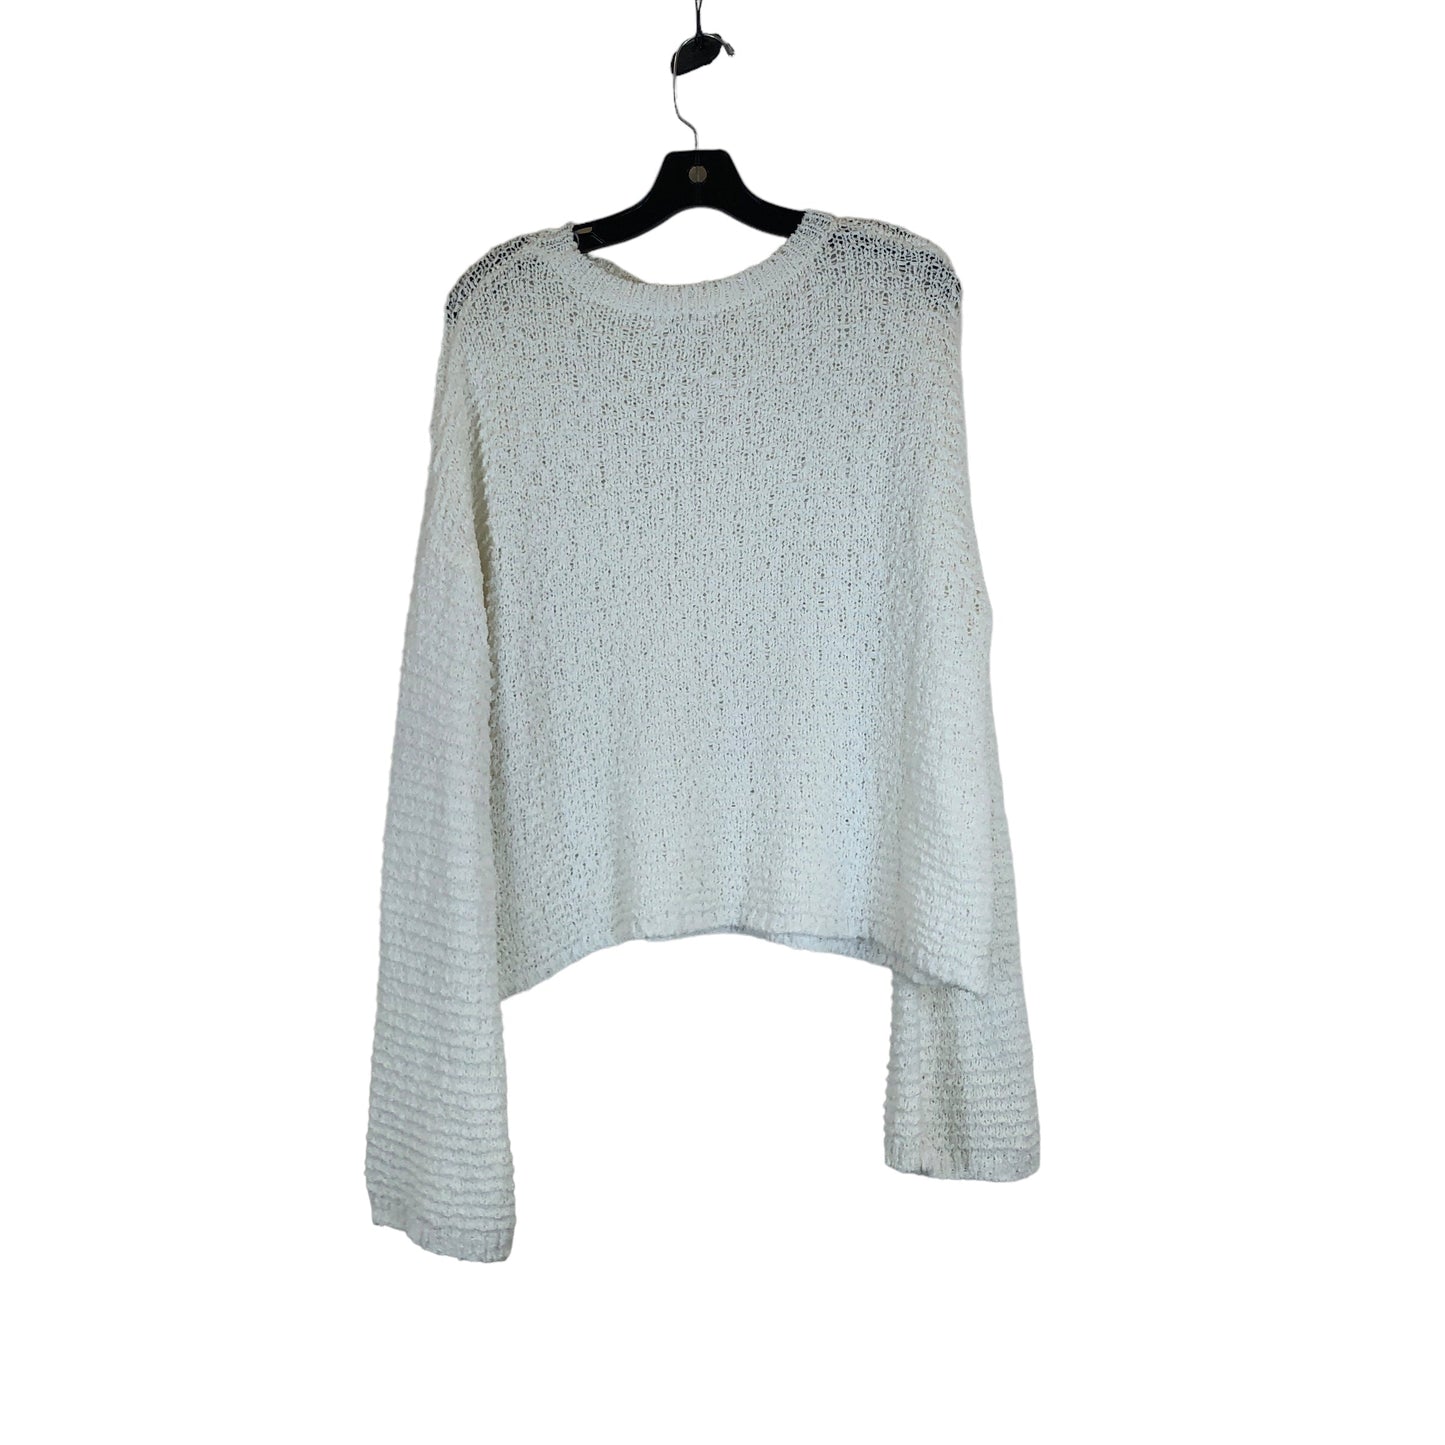 Sweater By Bb Dakota  Size: M